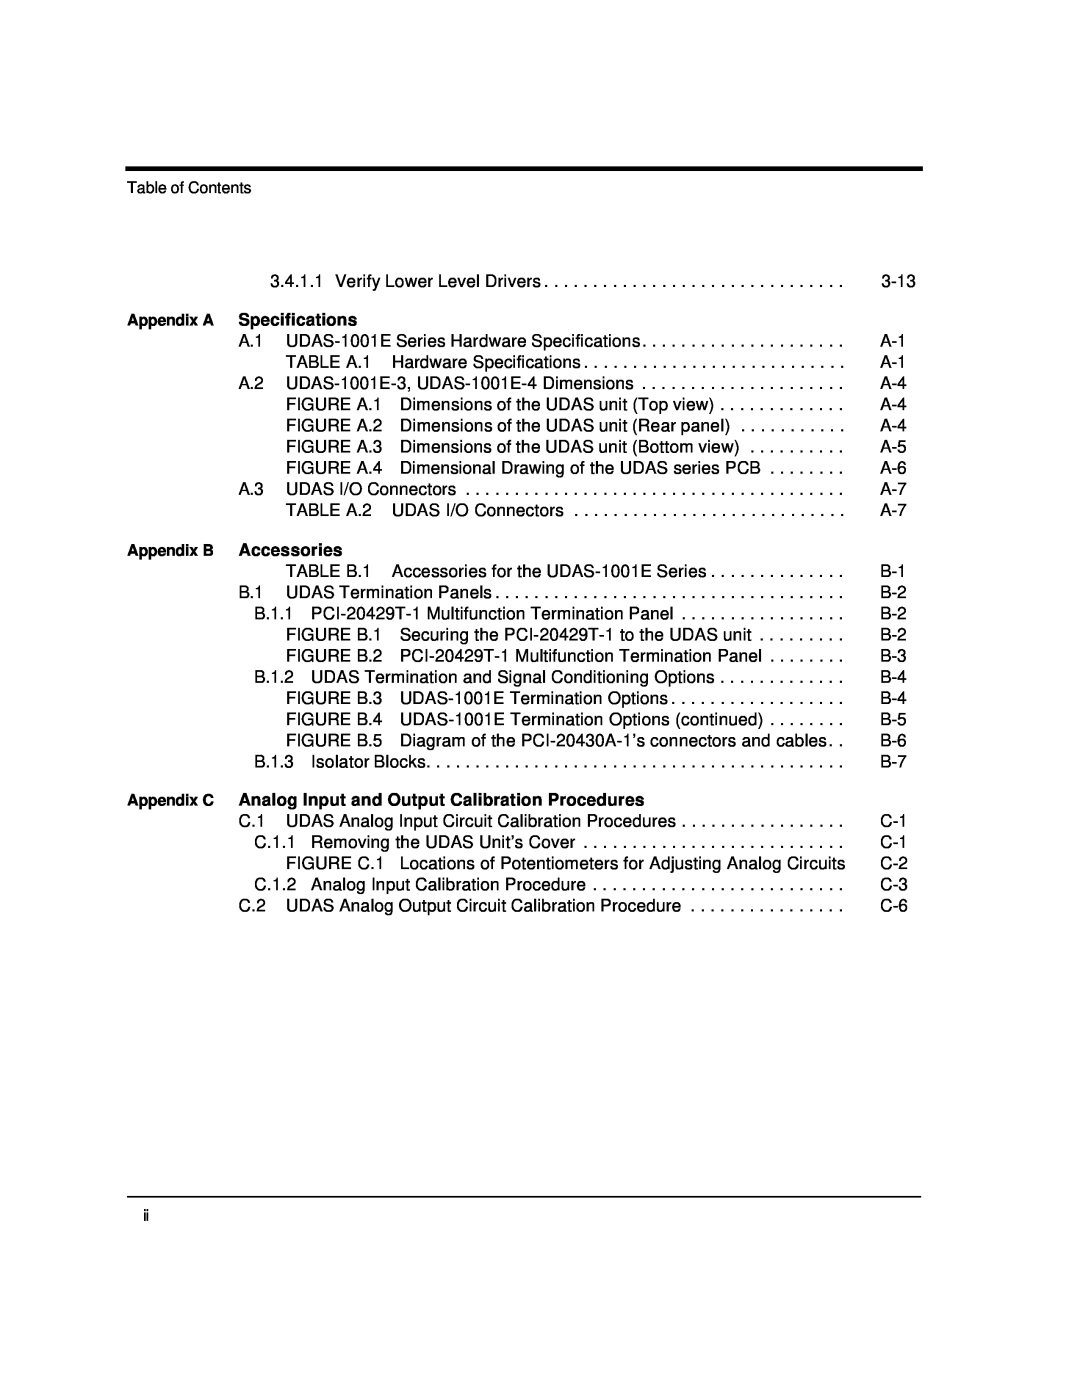 Intelligent Motion Systems UDAS-1001E user manual Specifications, Accessories, Appendix A, Appendix B 